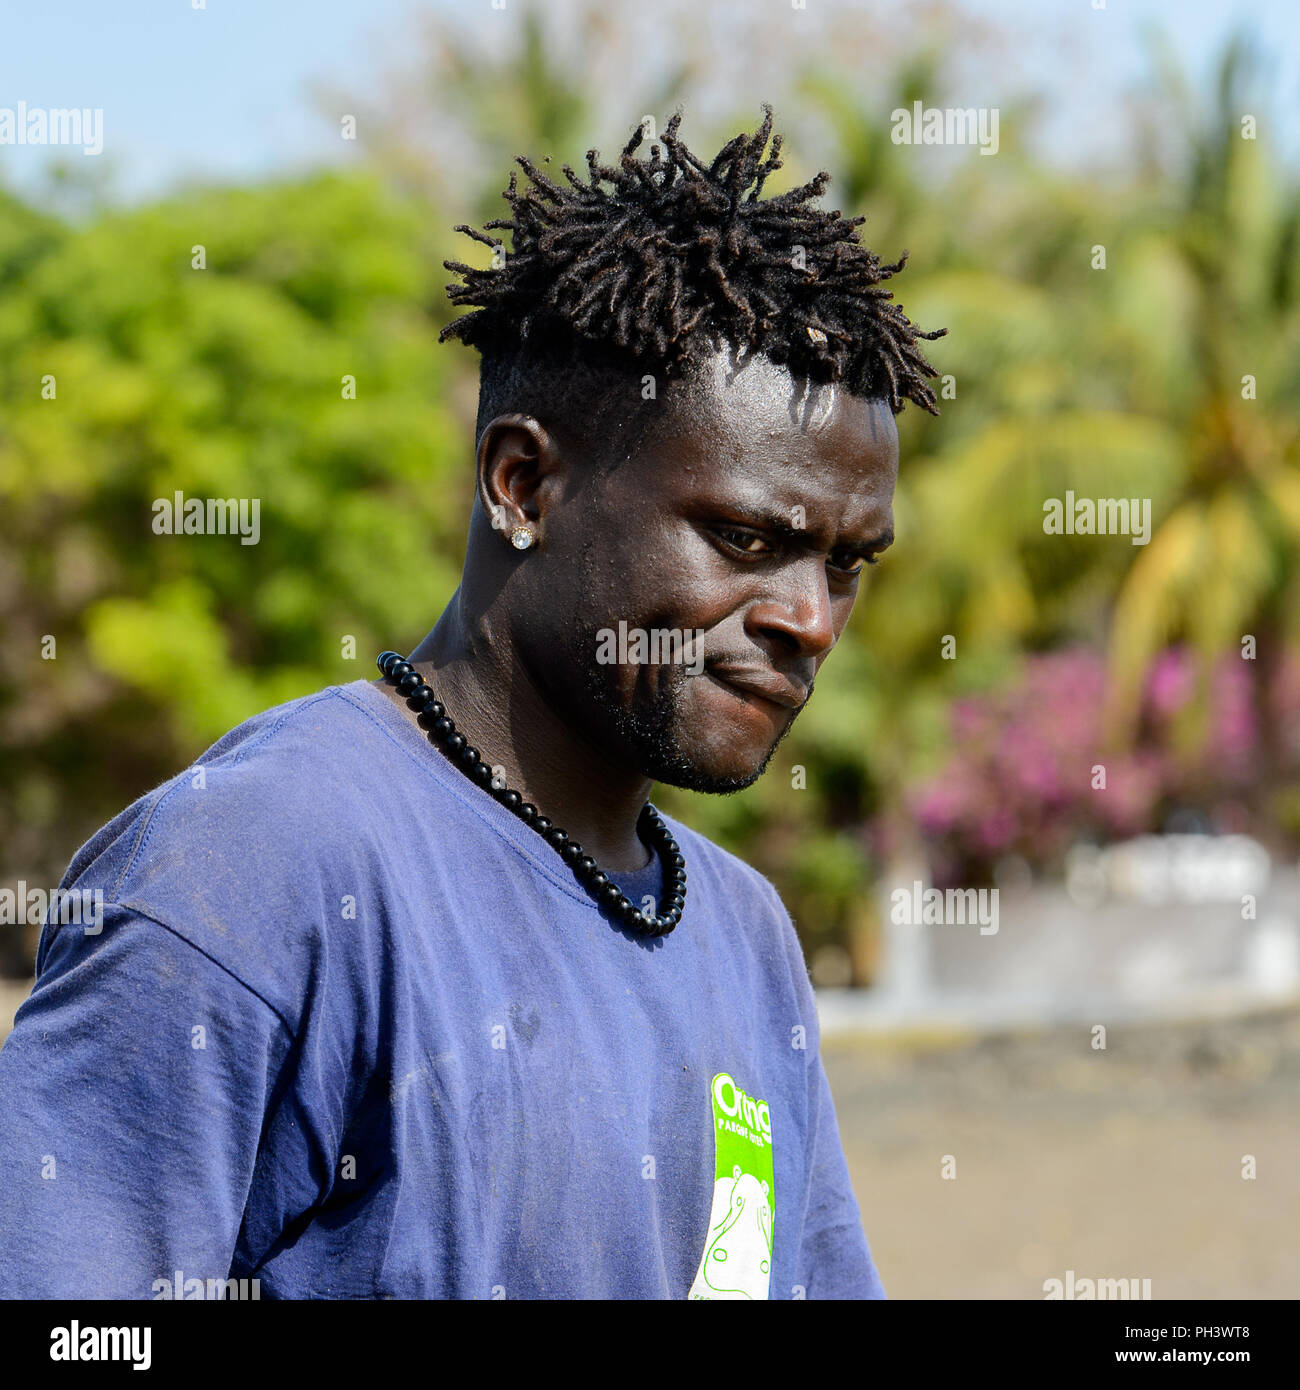 ORANGO ISLAND, GUINEA BISSAU - MAY 3, 2017: Unidentified local man with braids looks down on the Orango Island, Guinea Bissau Stock Photo